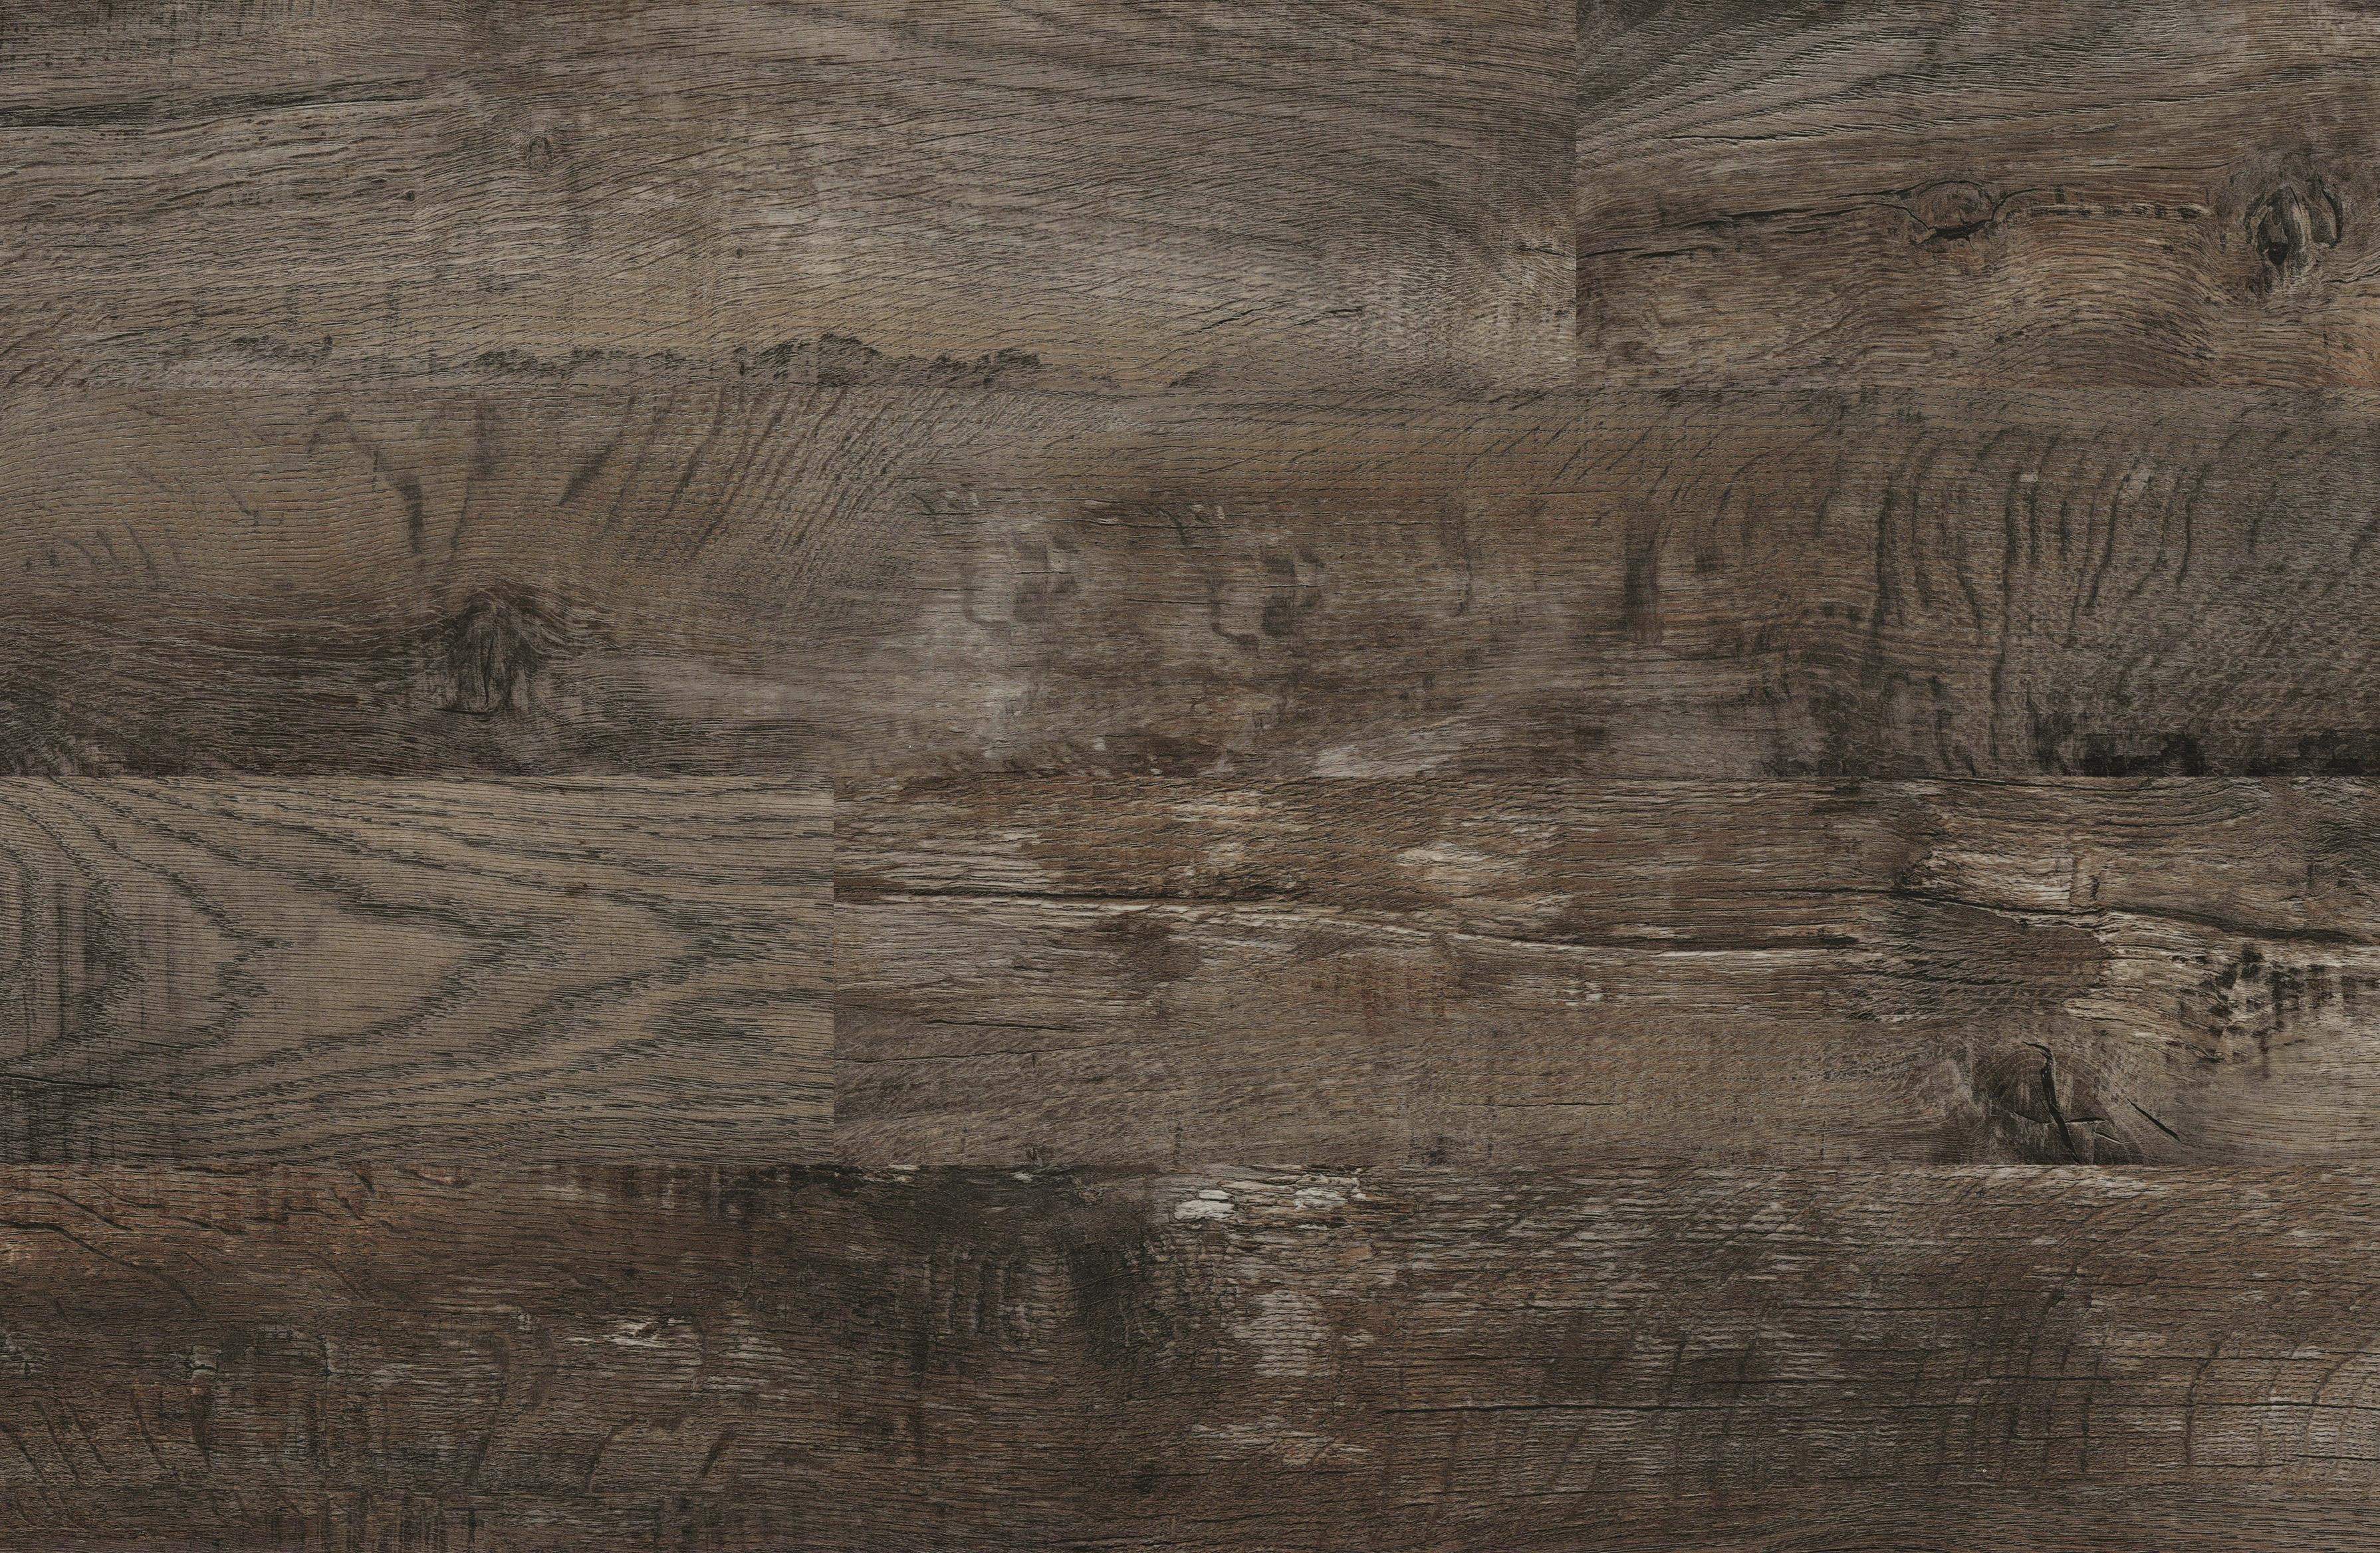 wide plank hardwood flooring reviews of home expressions hearthstone oak 6 wide luxury vinyl plank flooring inside 360390 5 84 x 35 8 horizontal